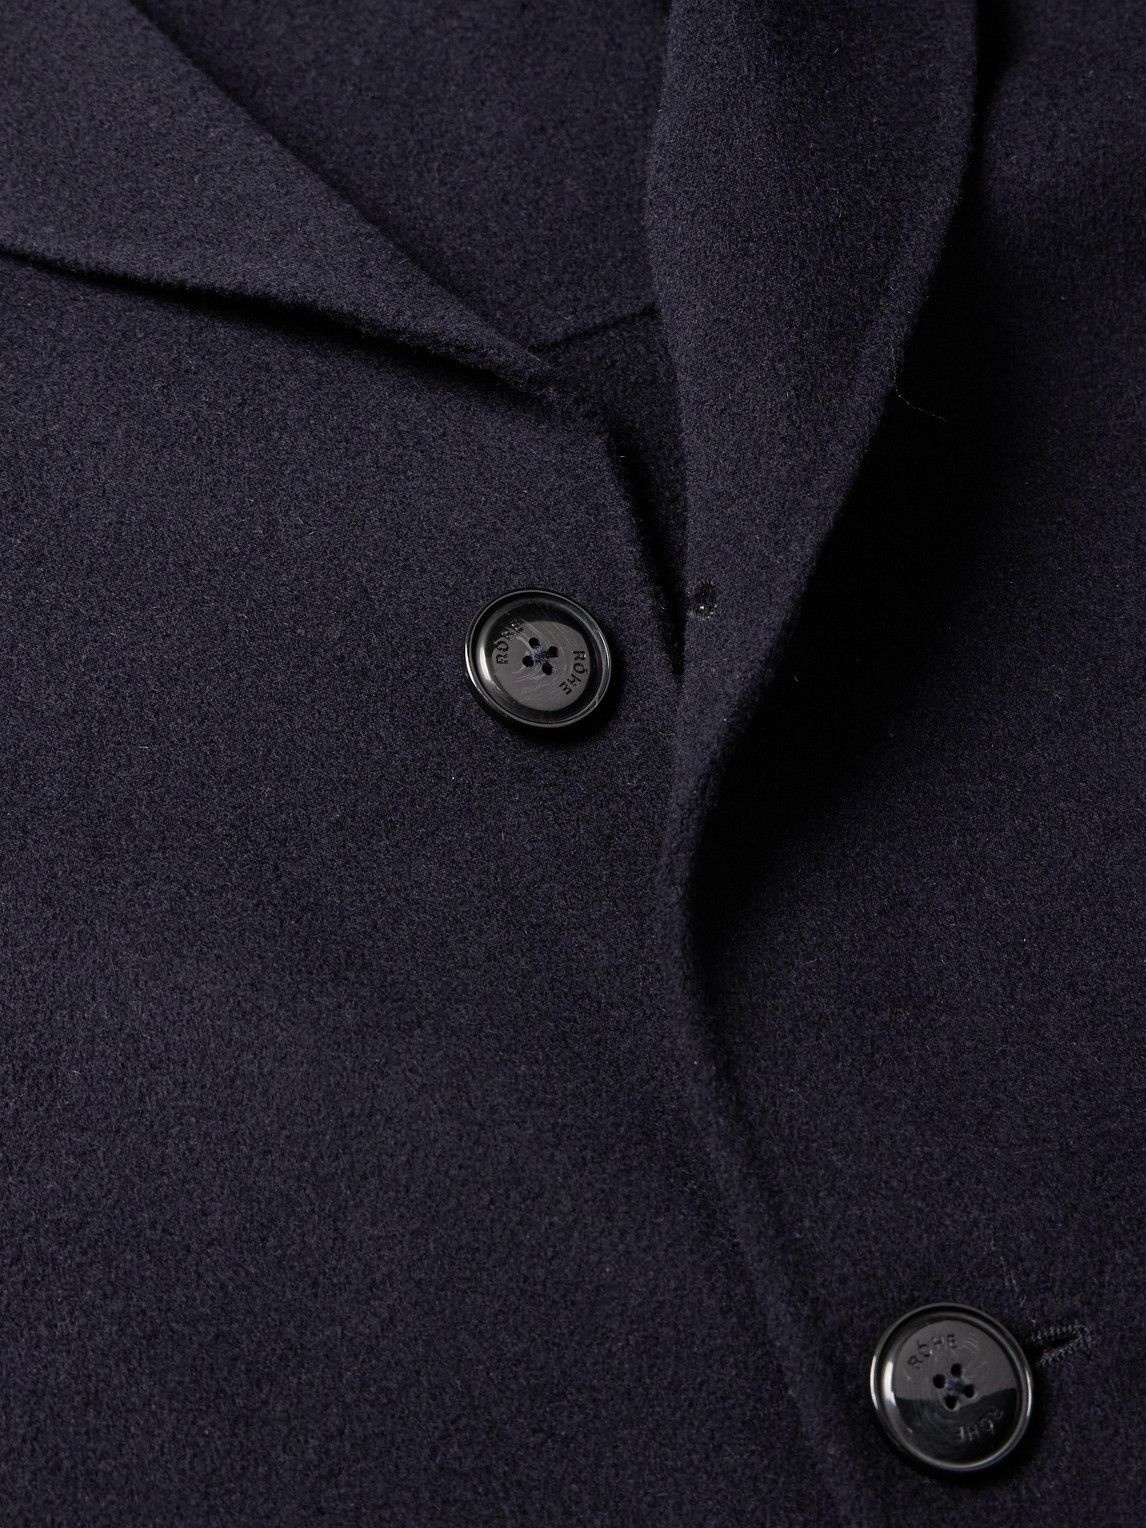 RÓHE - Wool Overcoat - Blue